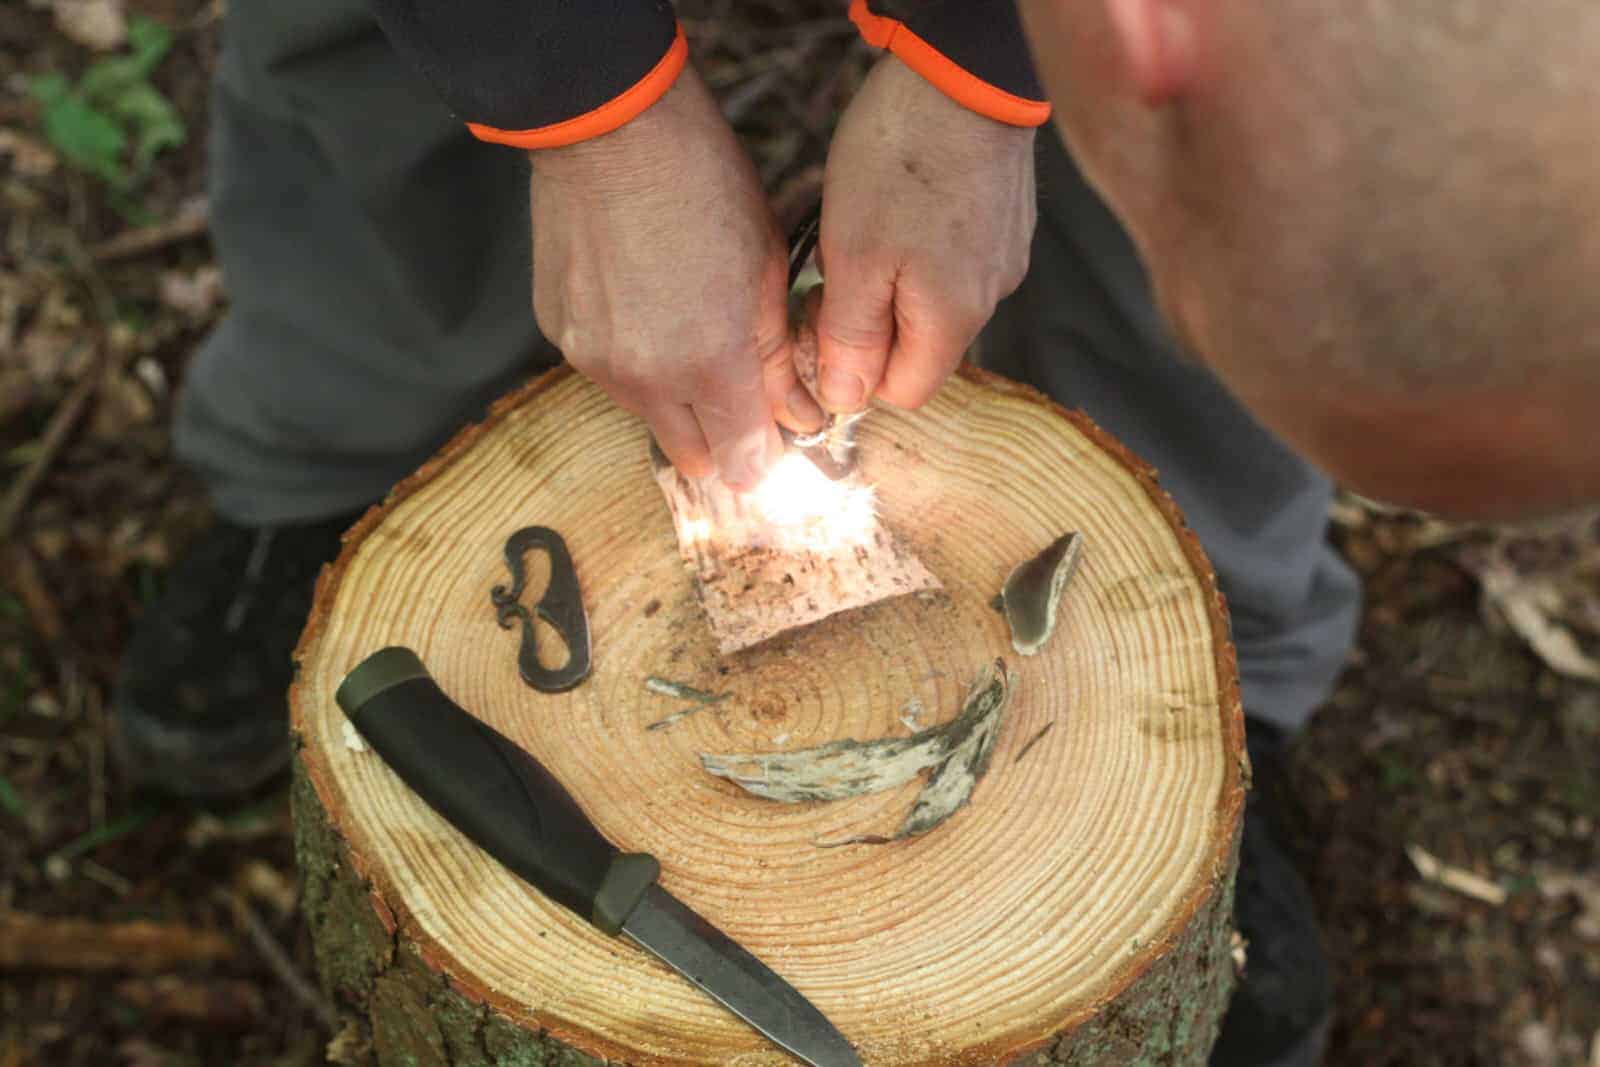 Choosing your first bushcraft knife